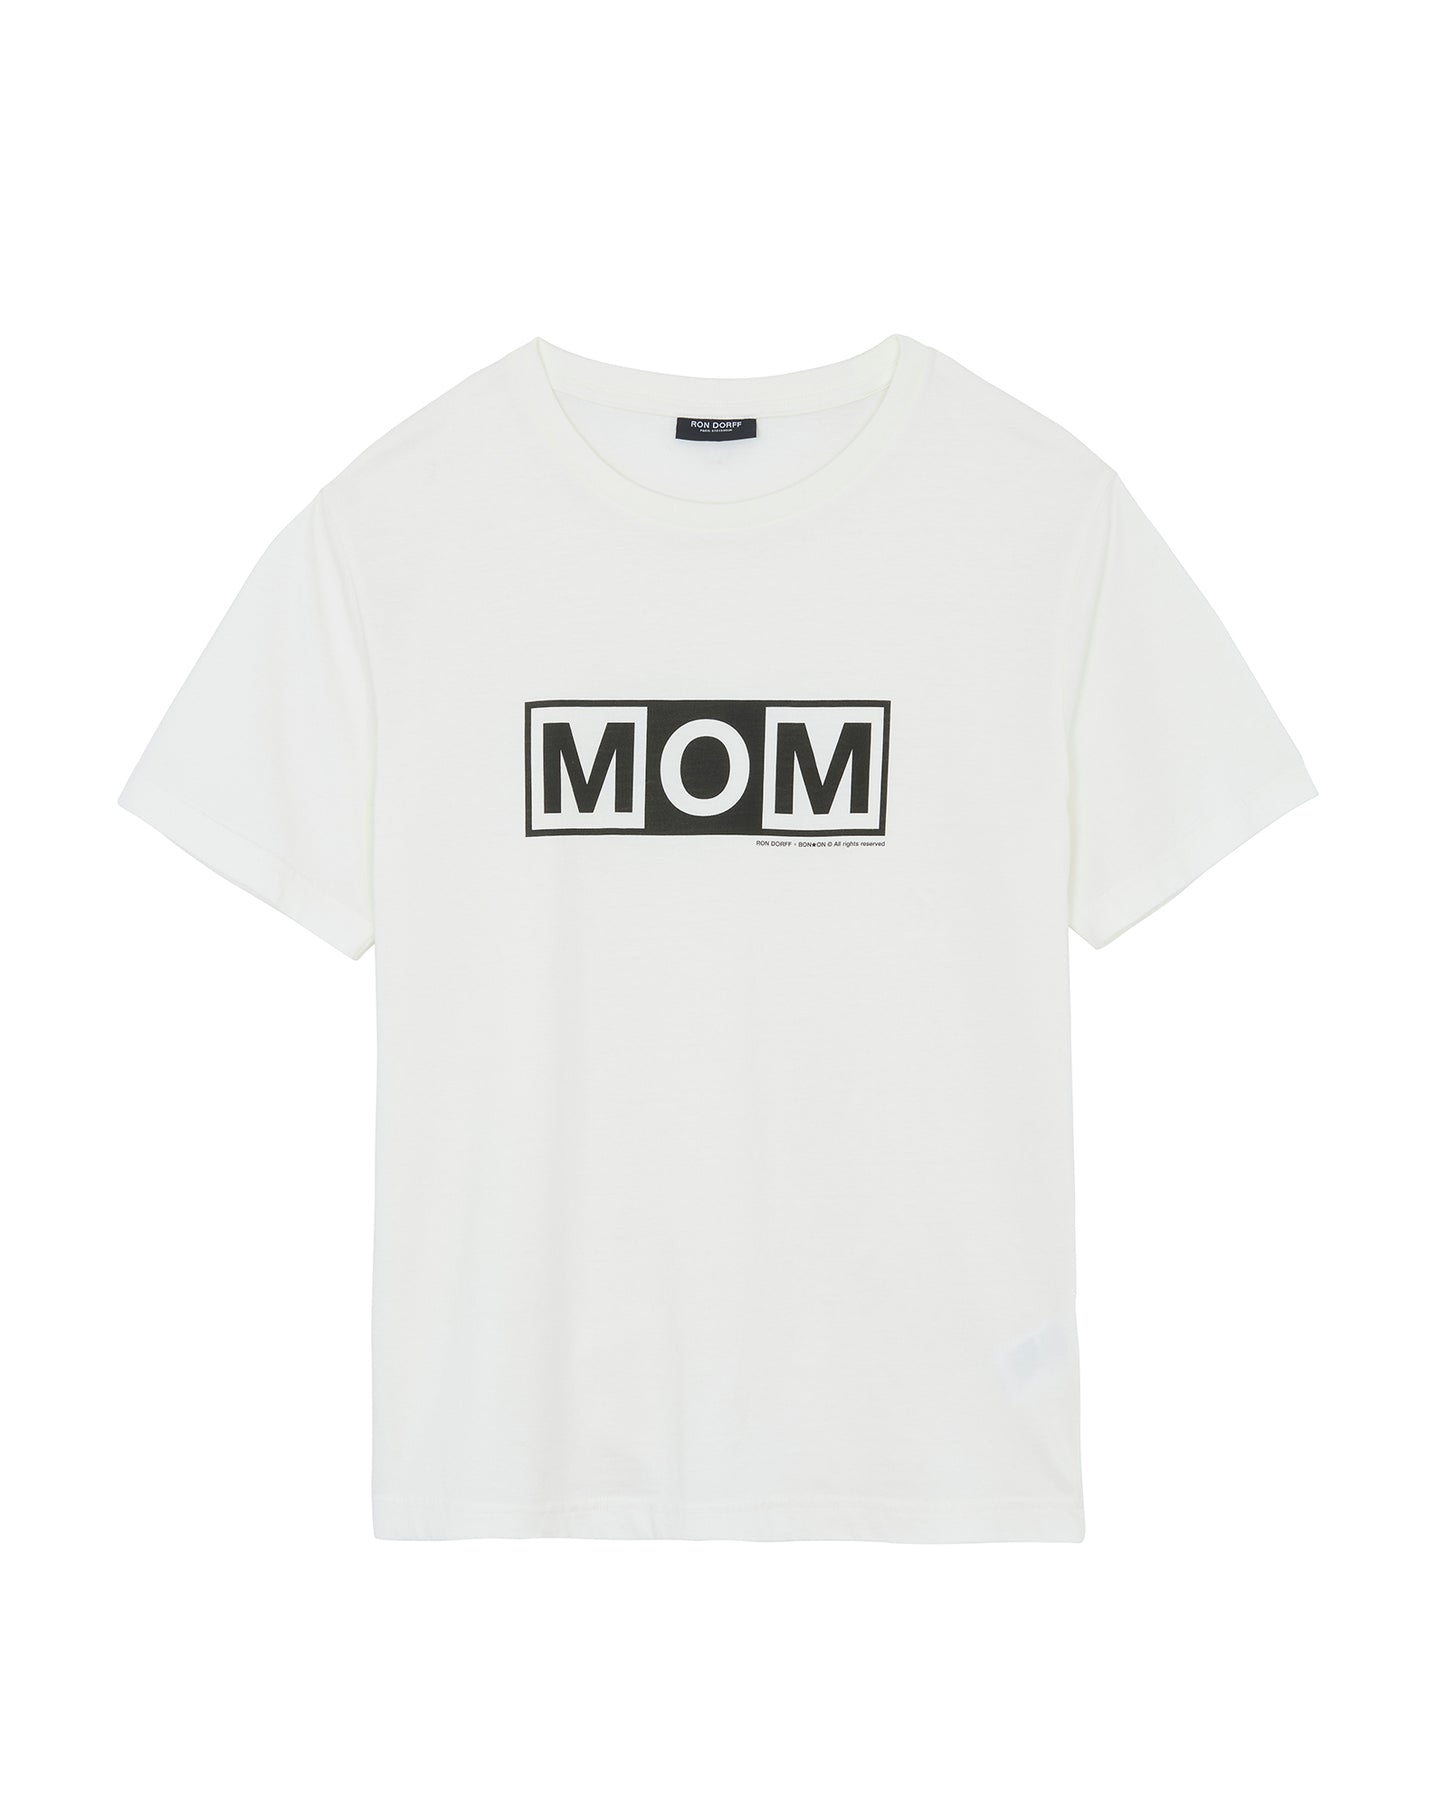 T-shirt - Mom ecru woman cotton bonton + ron dorff